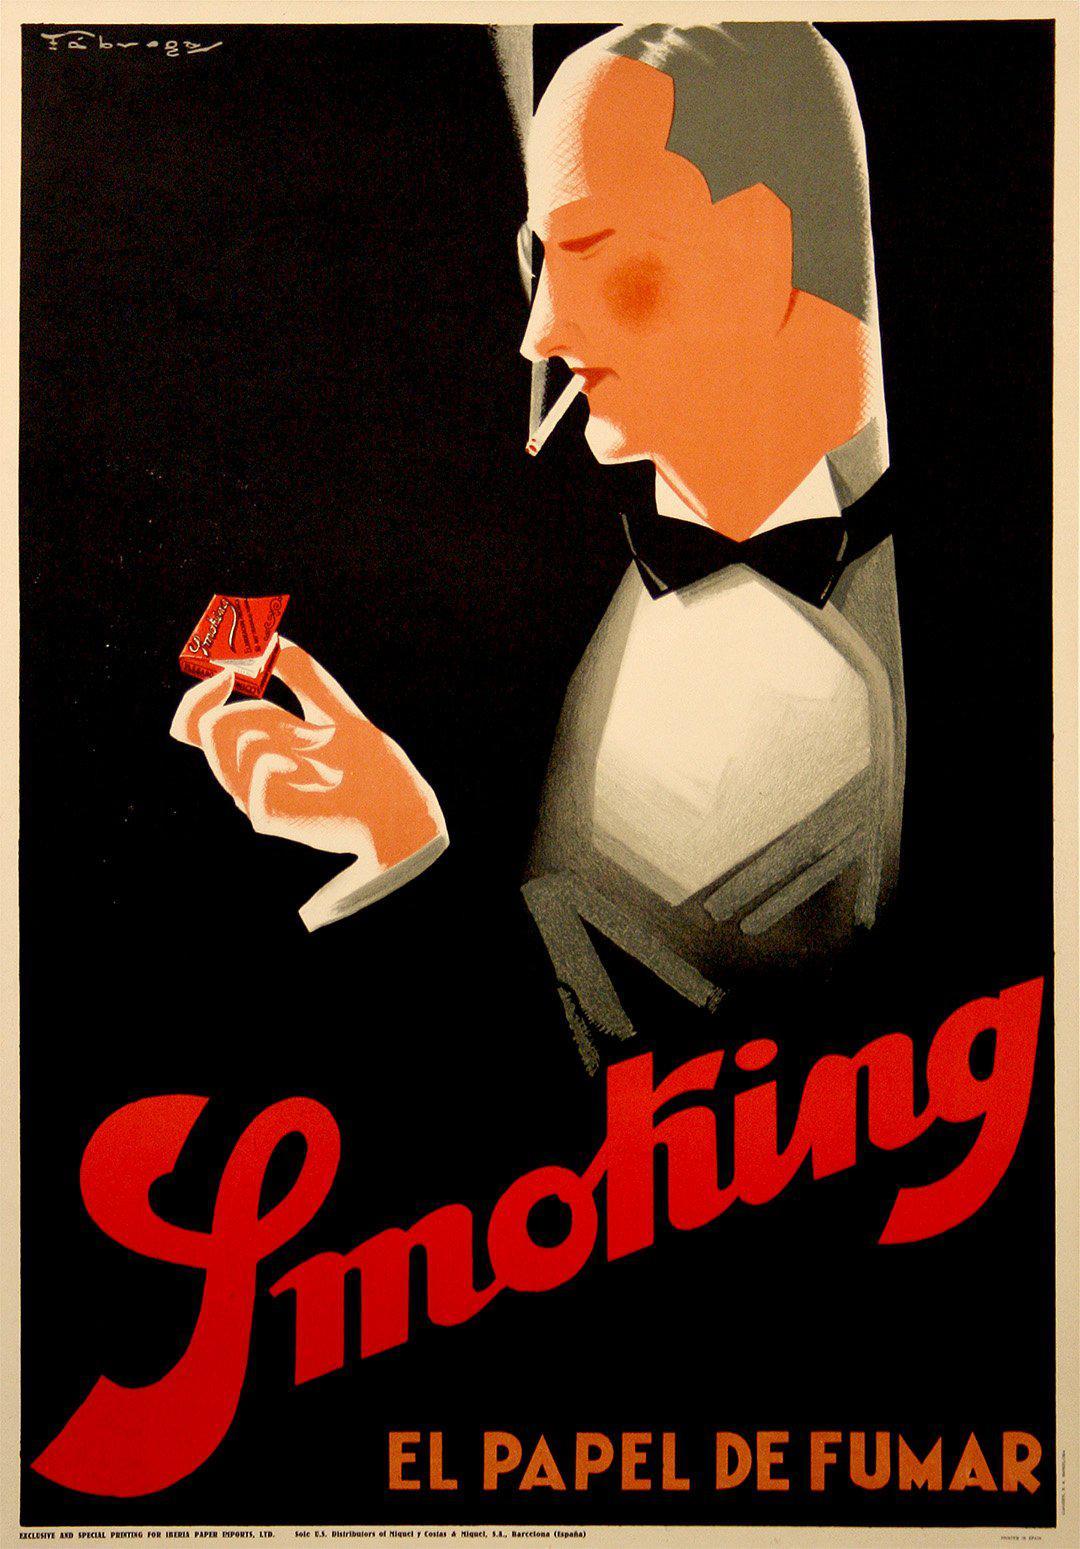 Original Vintage Art Deco Smoking Paper Poster by Fabraga c1930